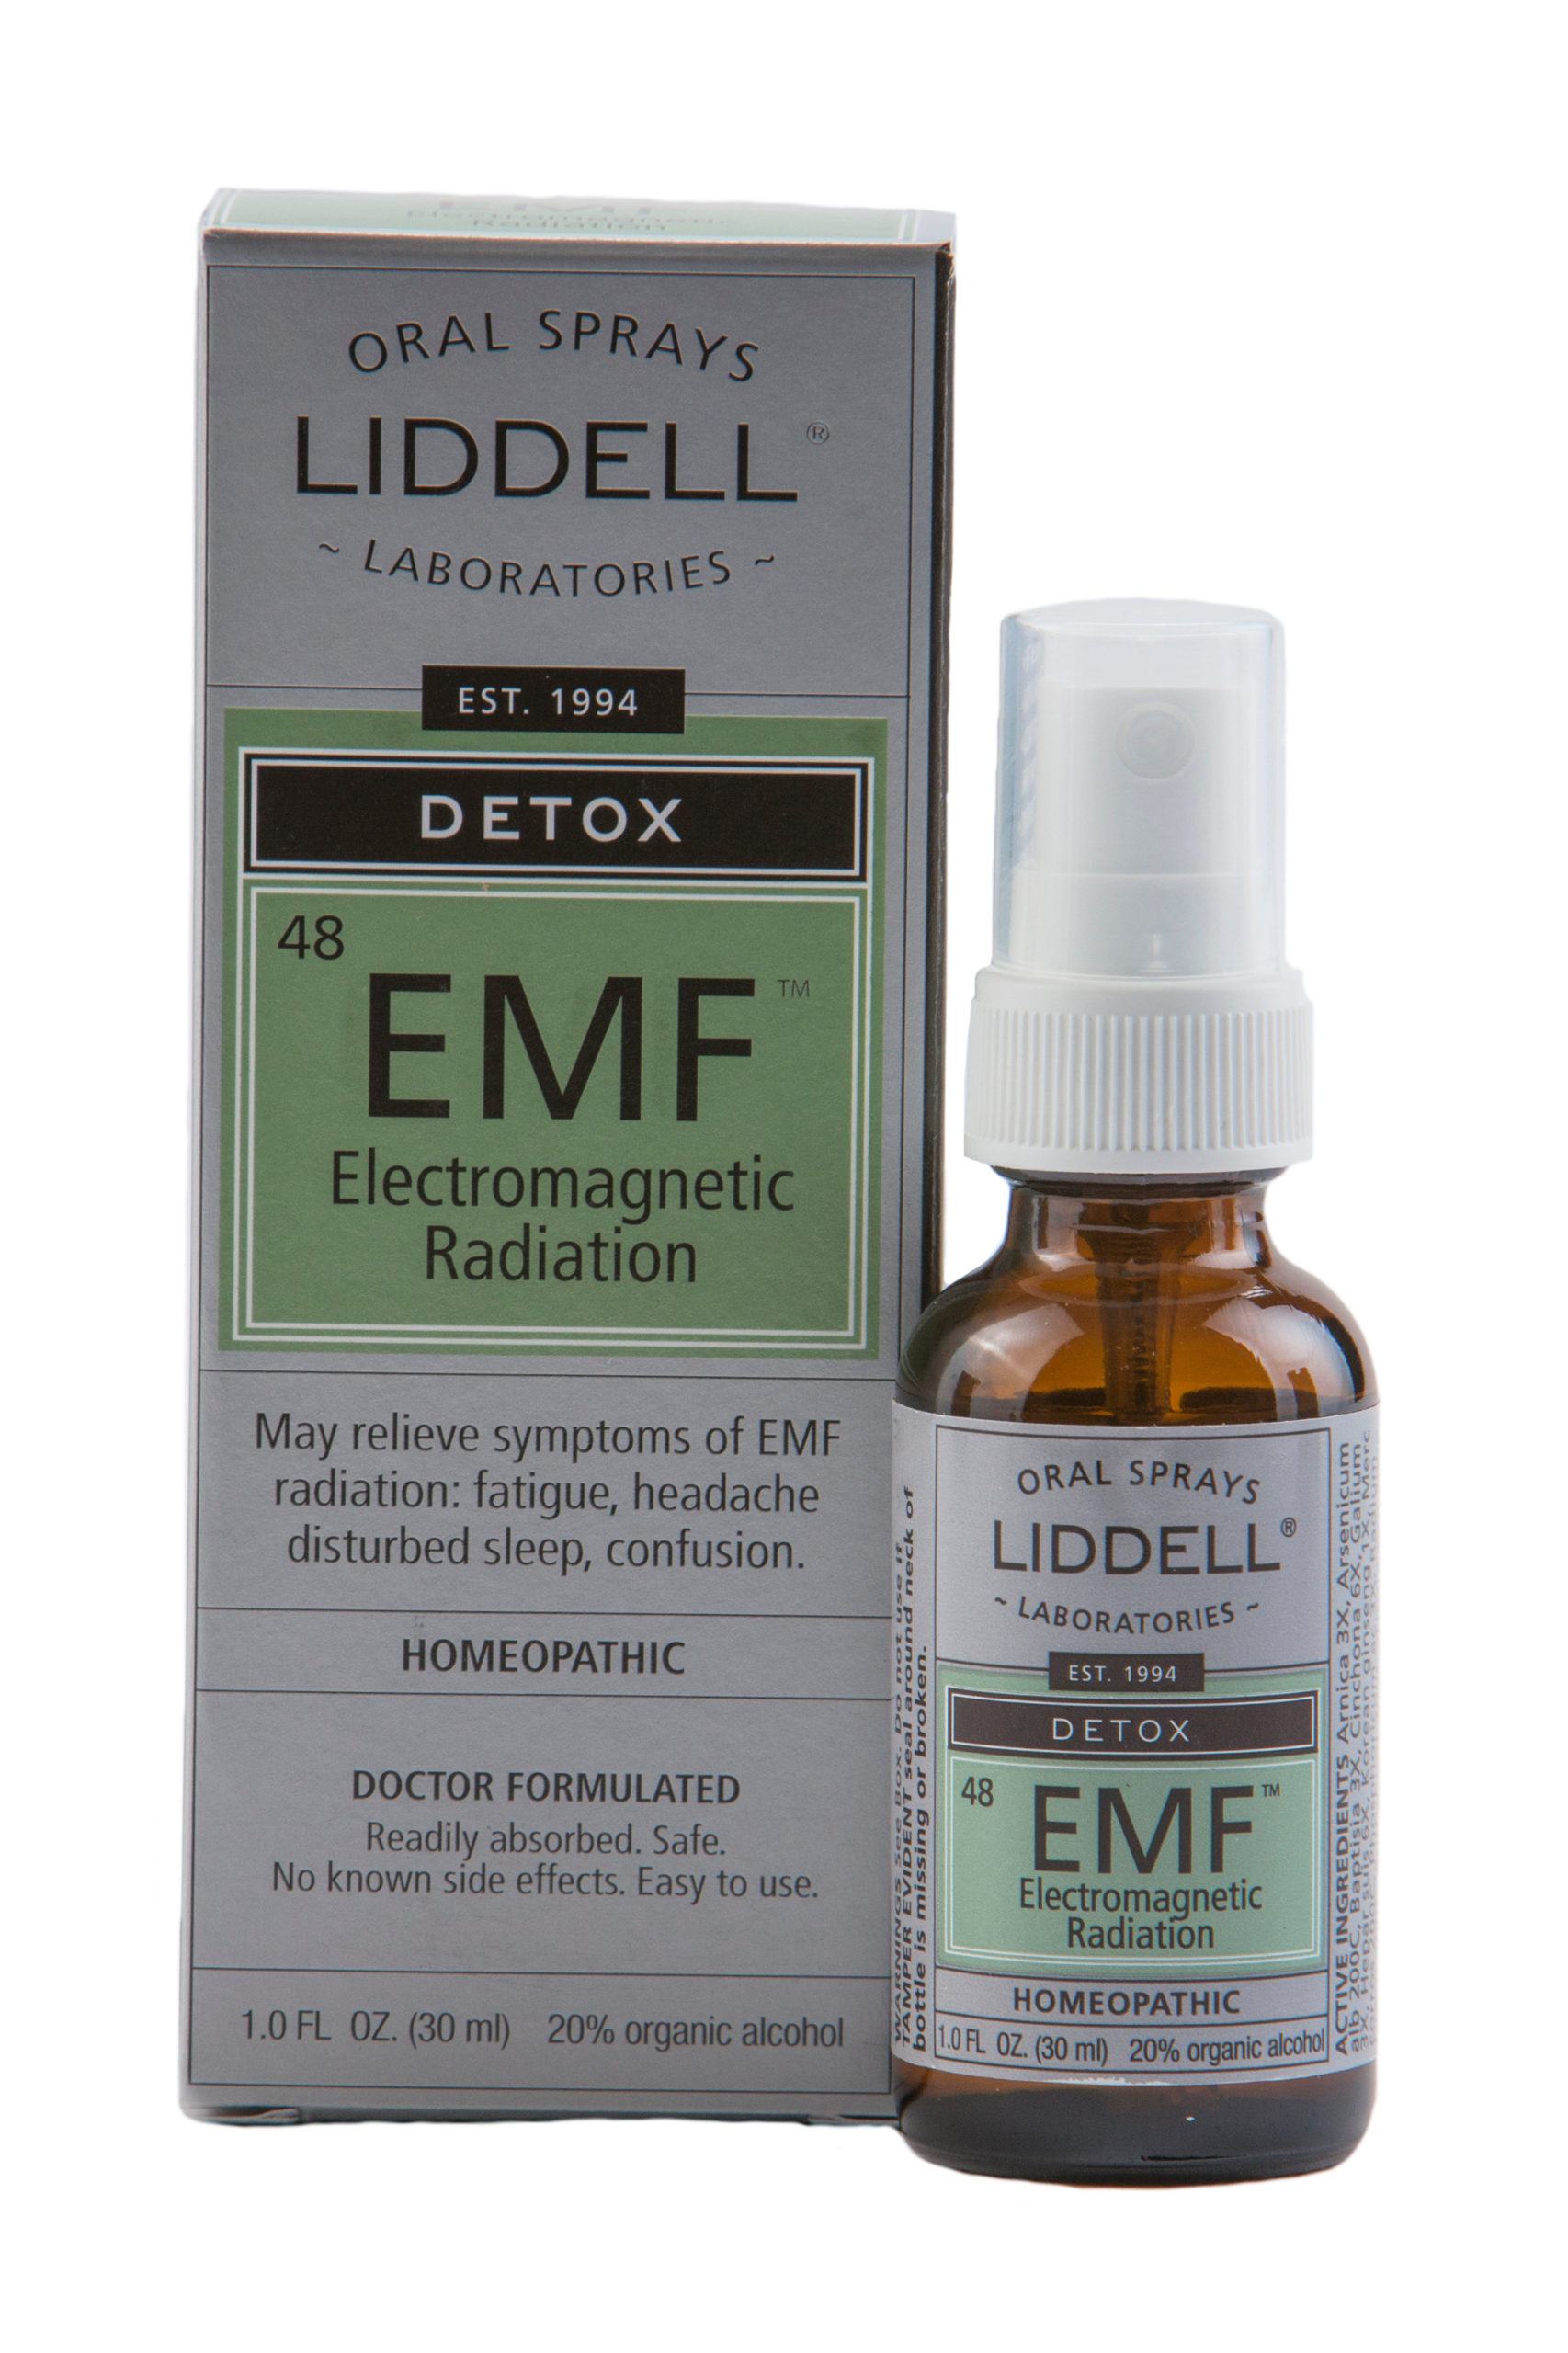 EMF, Electromagnetic Radiation - Detox